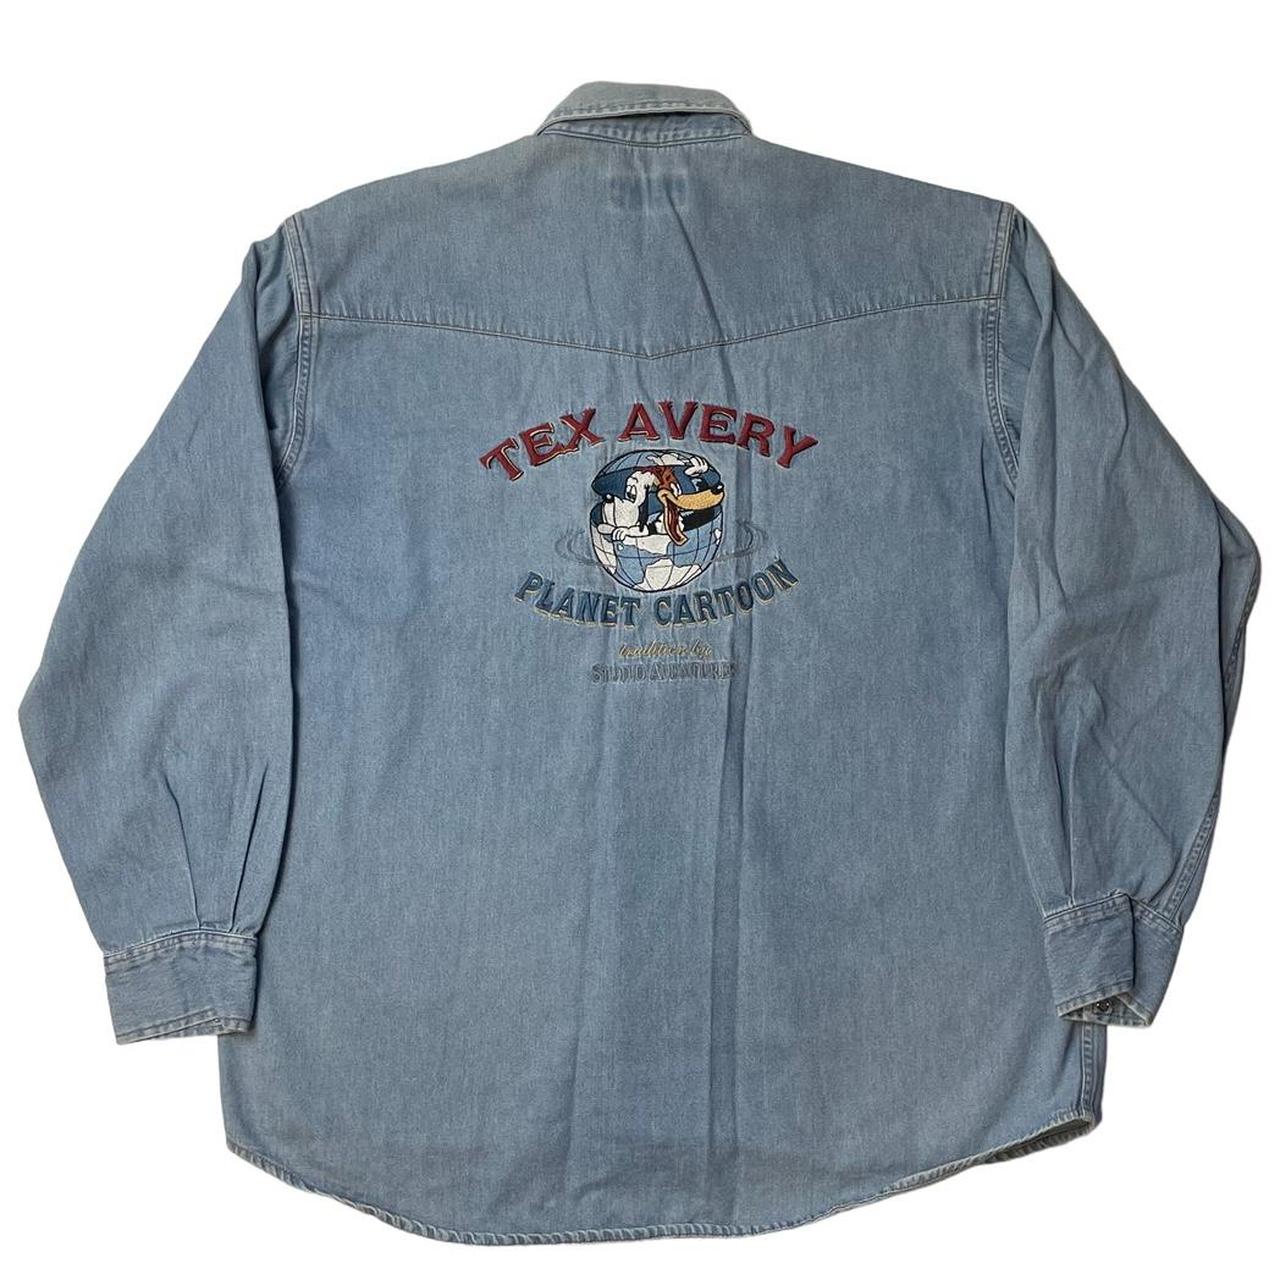 Vintage Tex Avery Plant Cartoon denim shirt blue... - Depop